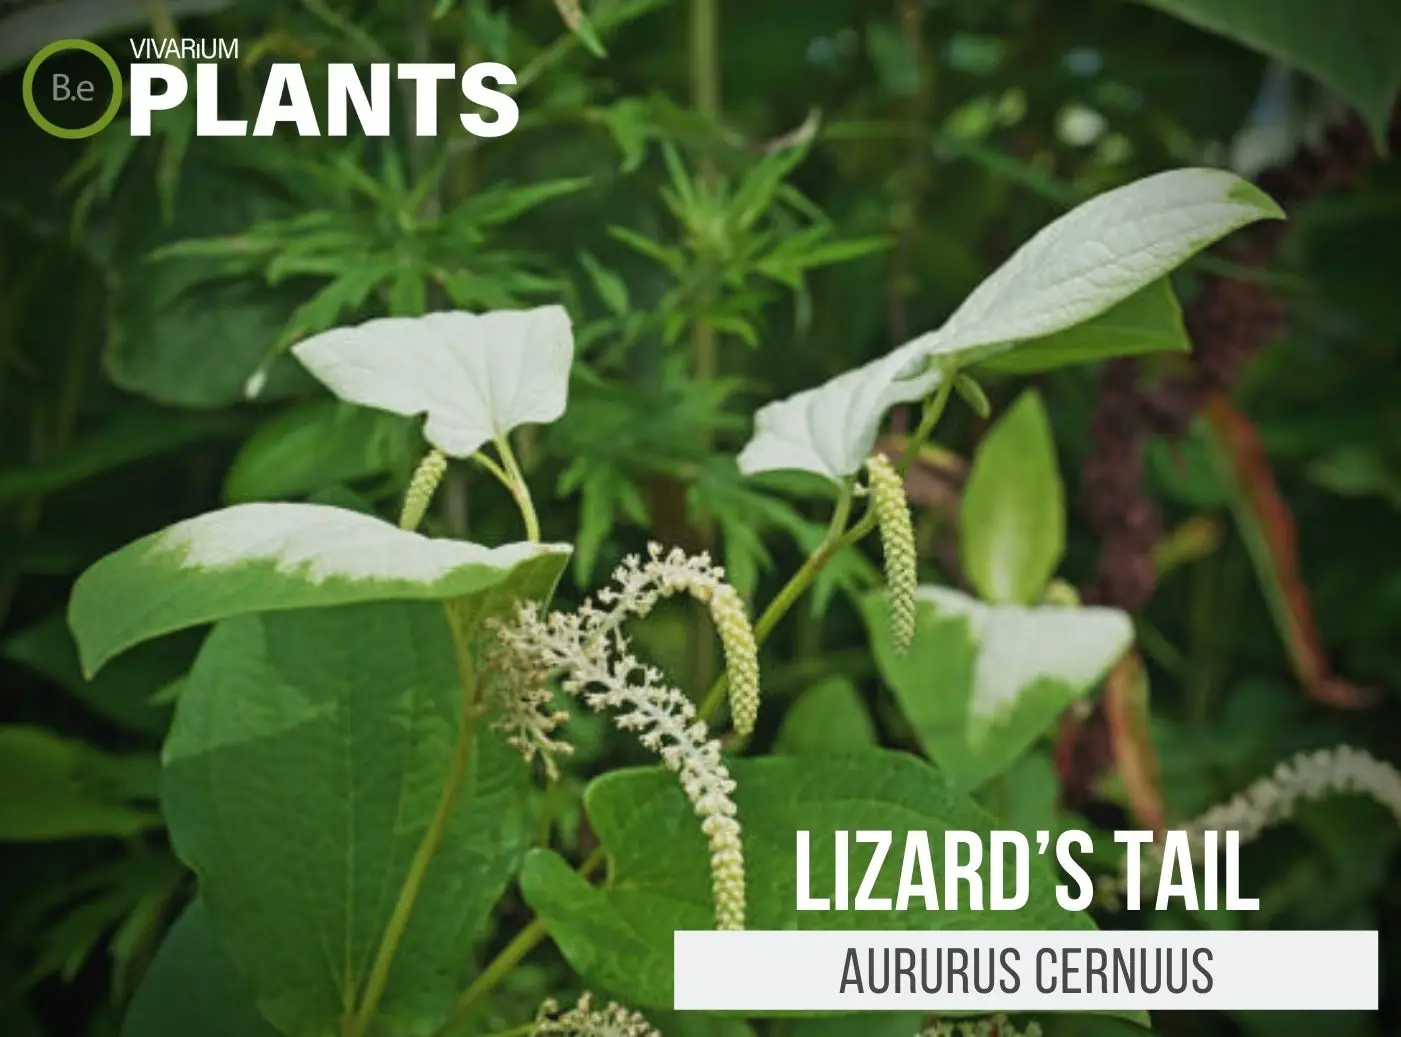 Saururus cernuus "Lizard’s Tail" Plant Care Guide